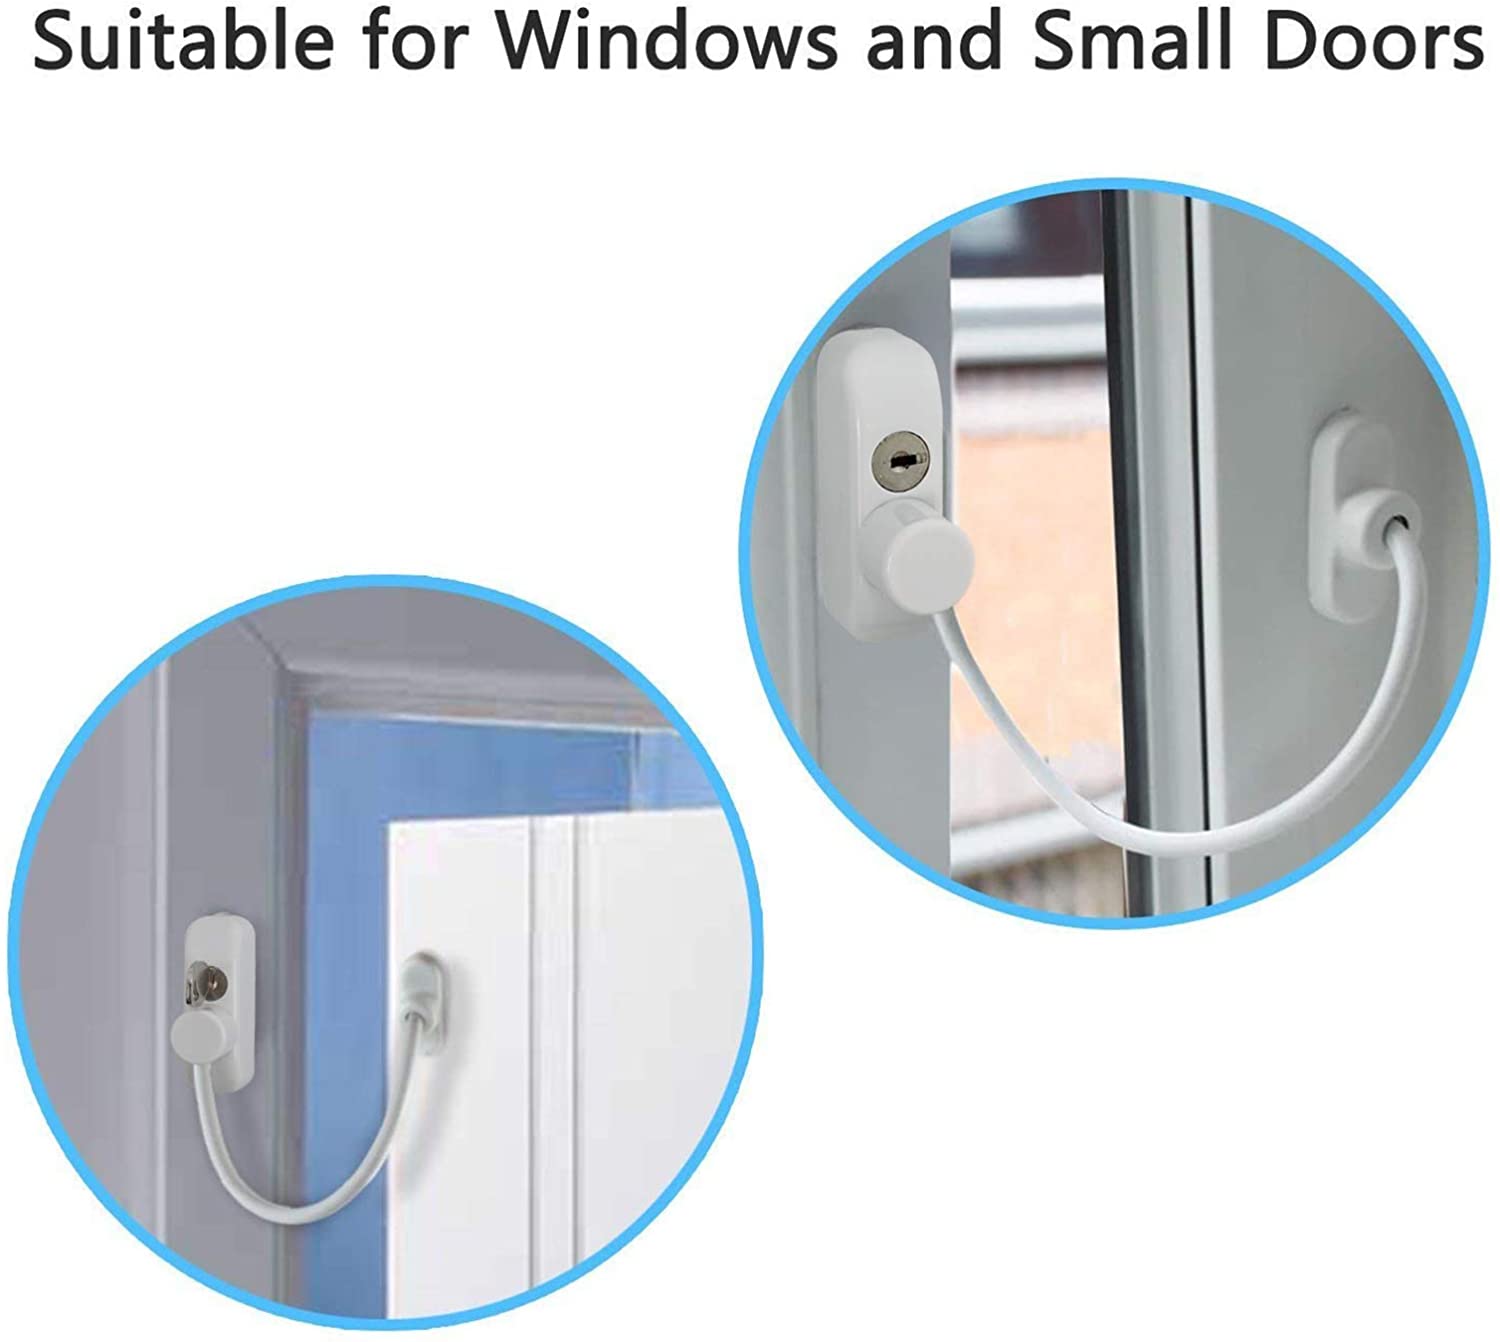 Kamtop Window Restrictor Locks 4 Packs Security Cable